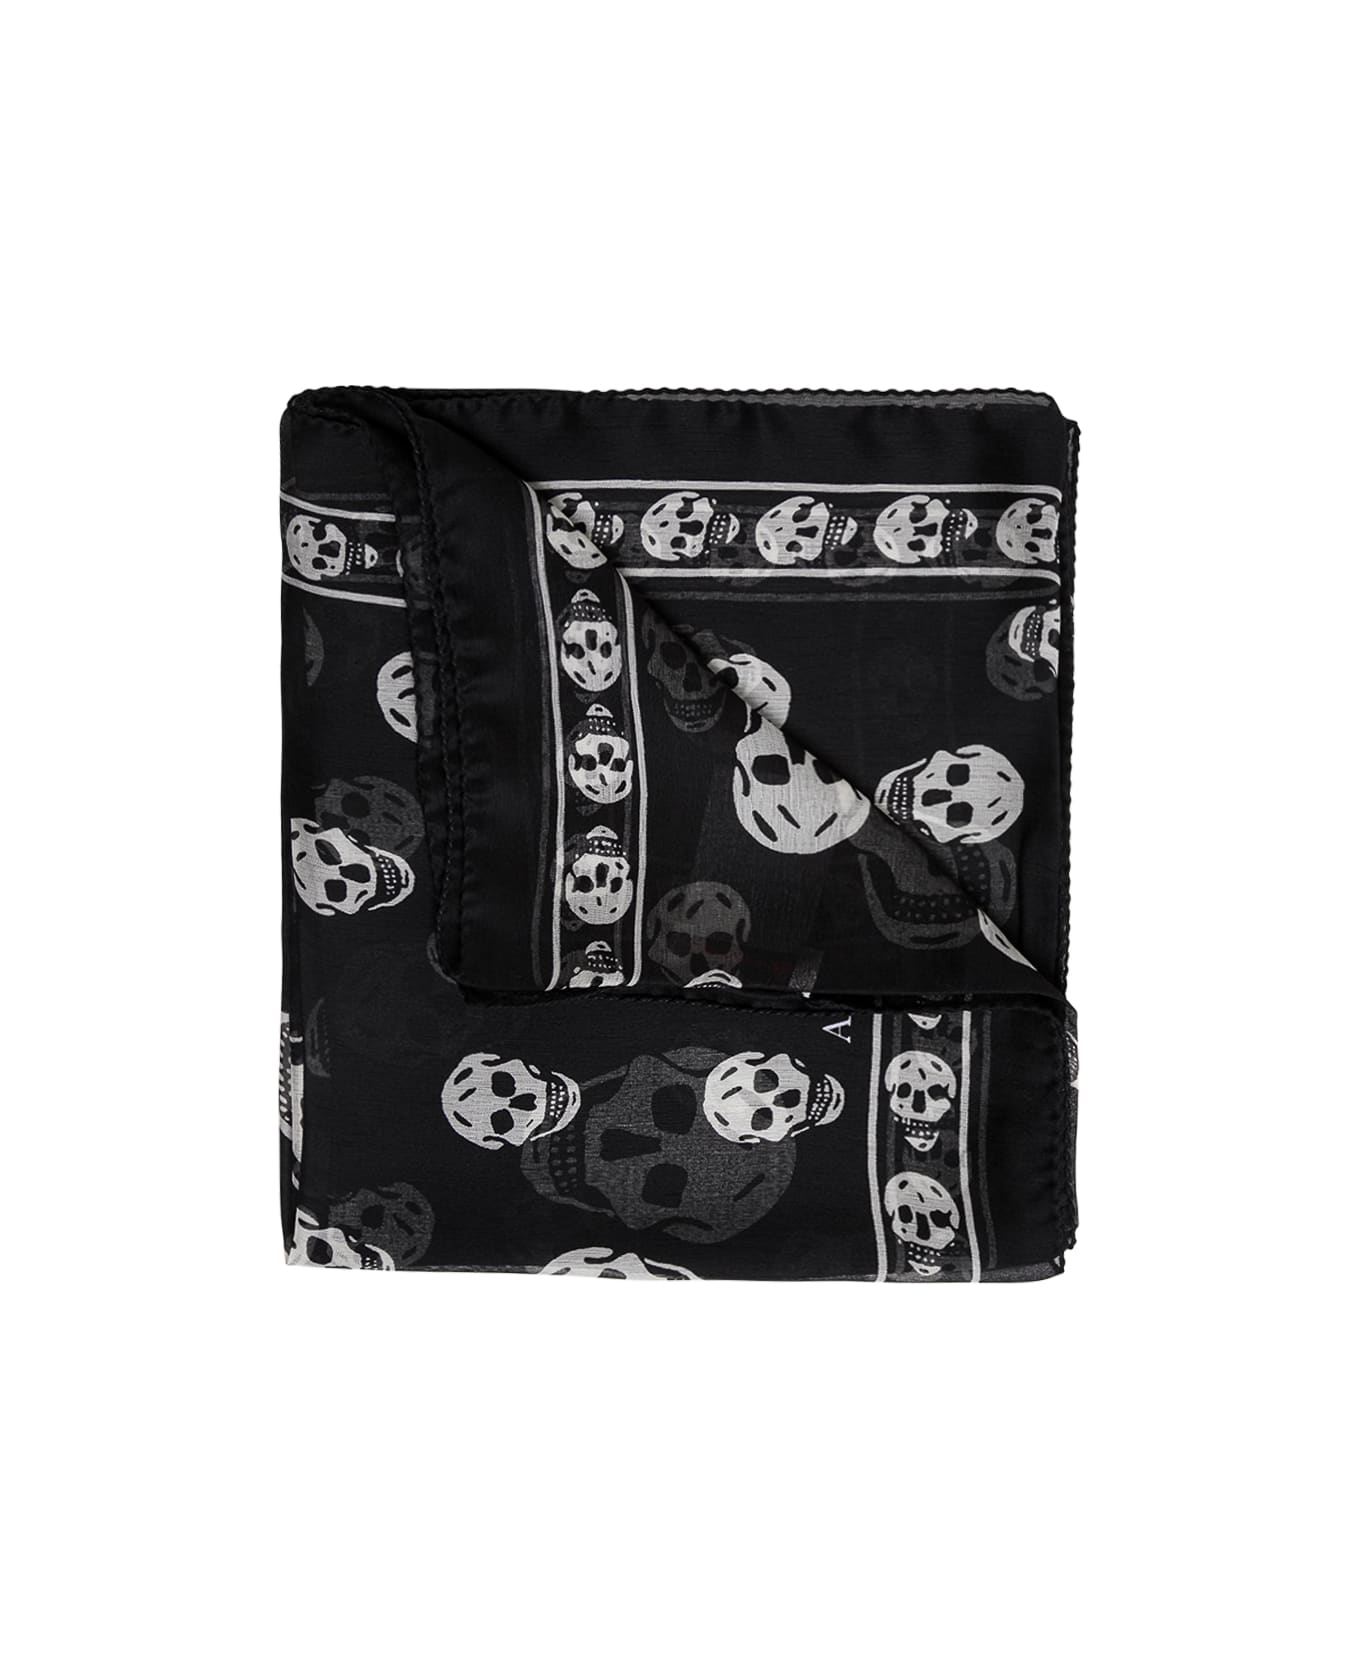 Alexander McQueen Women's Black And White Silk Skull Scarf - Black スカーフ